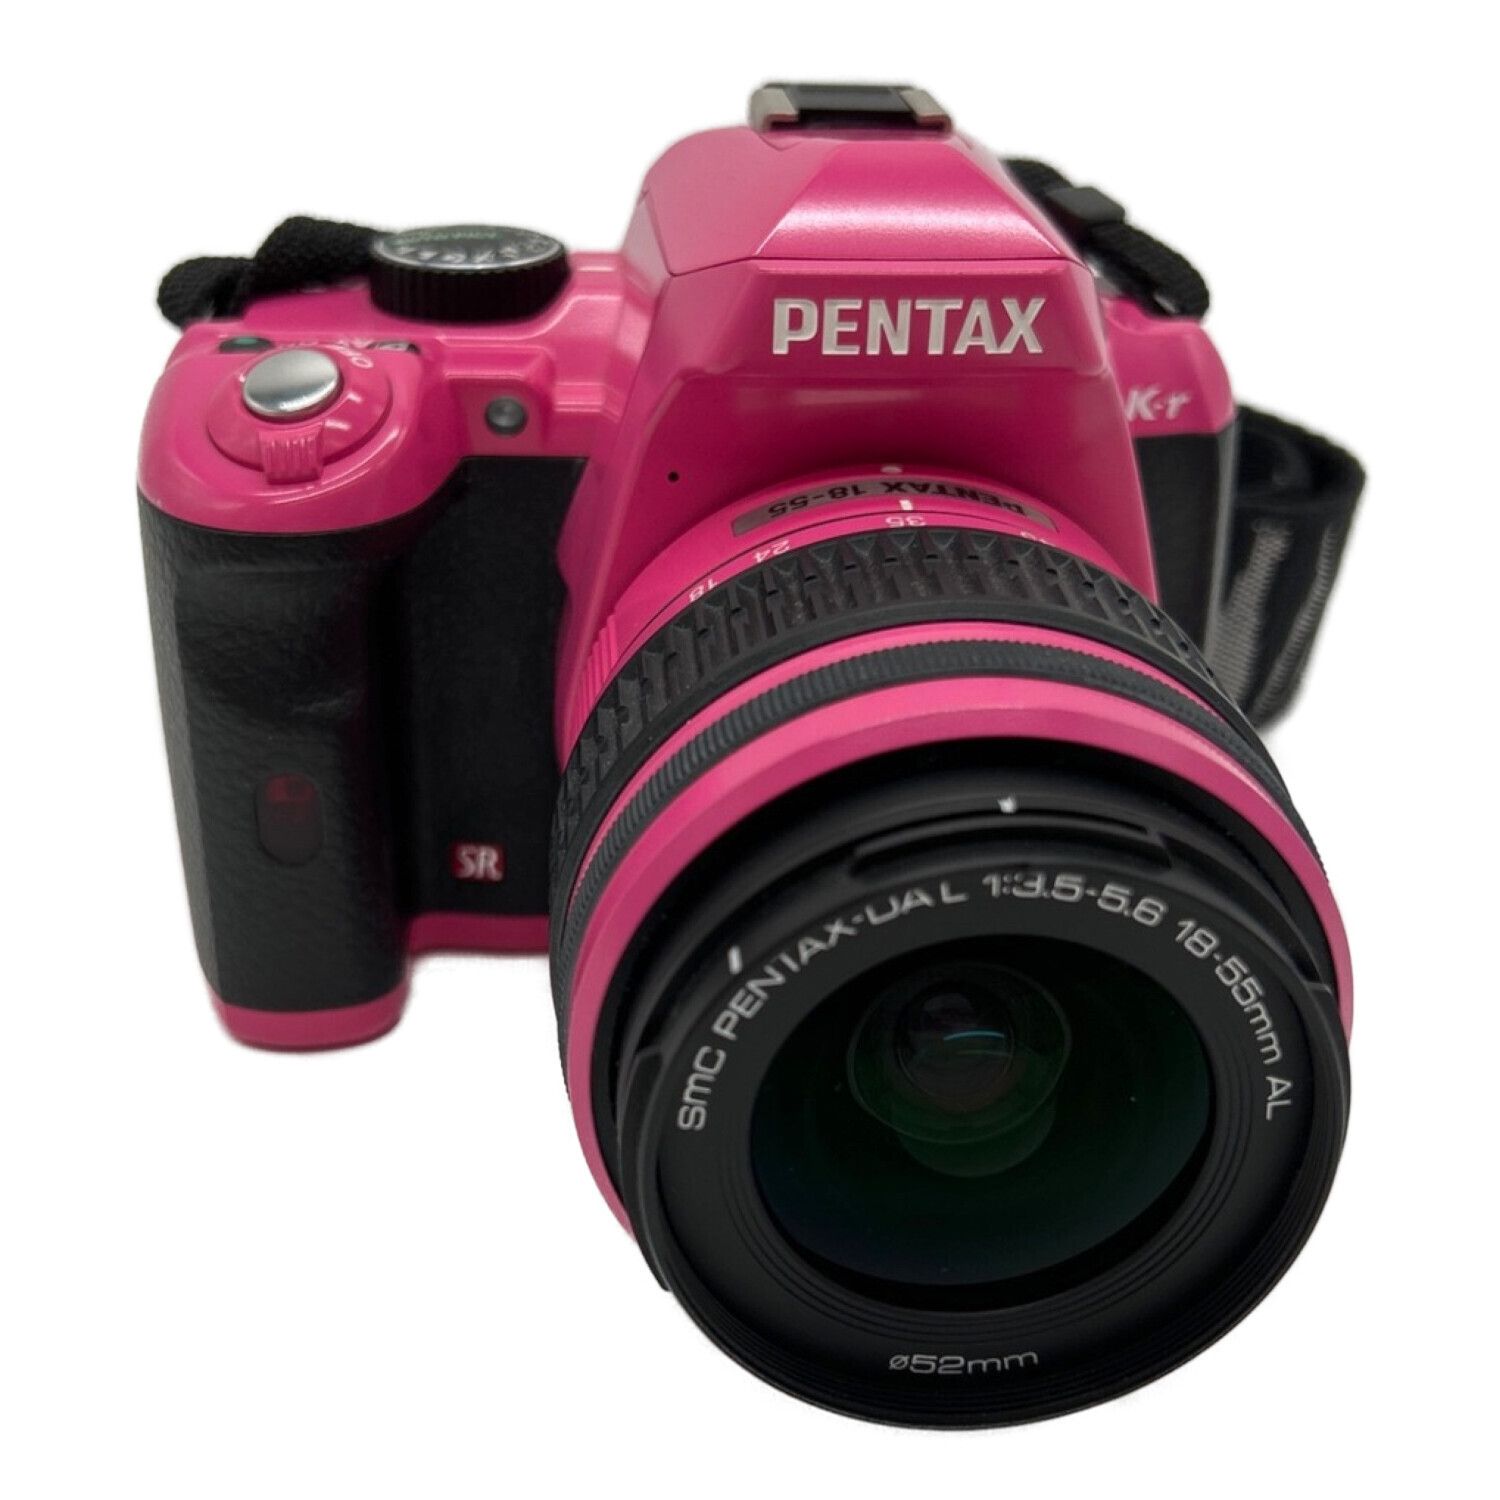 PENTAX (ペンタックス) デジタル一眼レフカメラ K-r 1290万画素 乾電池